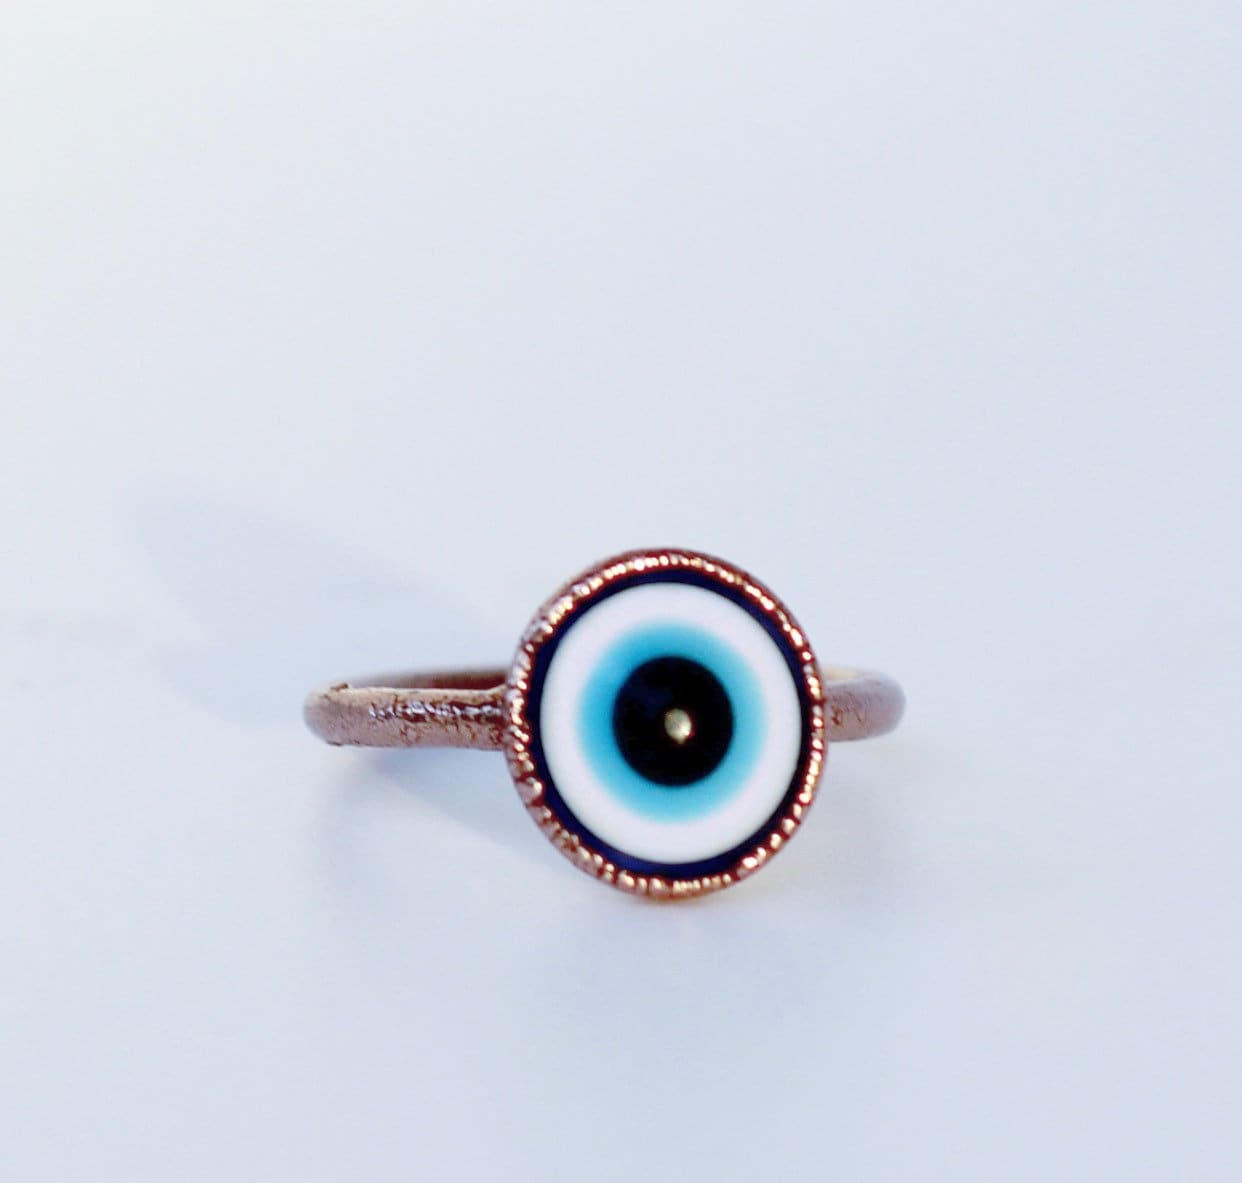 Evil Eye Ring, Evil Eye Jewelry, Big Eye Ring, Turkish Eye Ring, Protection Eye Ring, Third Eye Ring